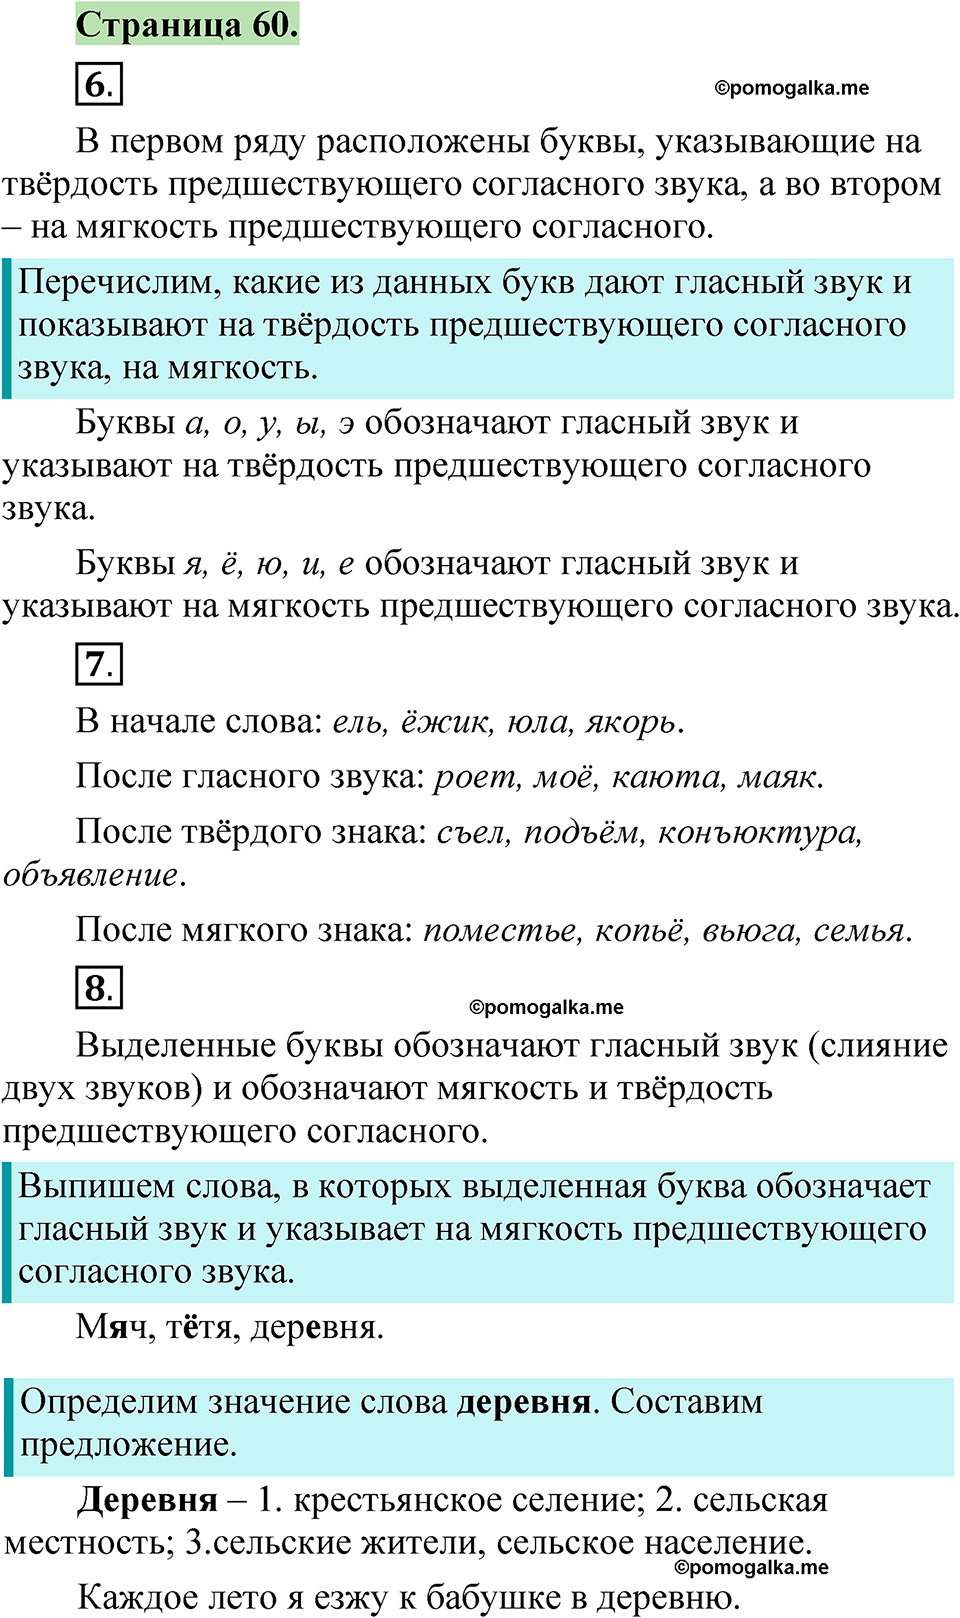 страница 60 русский язык 1 класс Канакина 2023